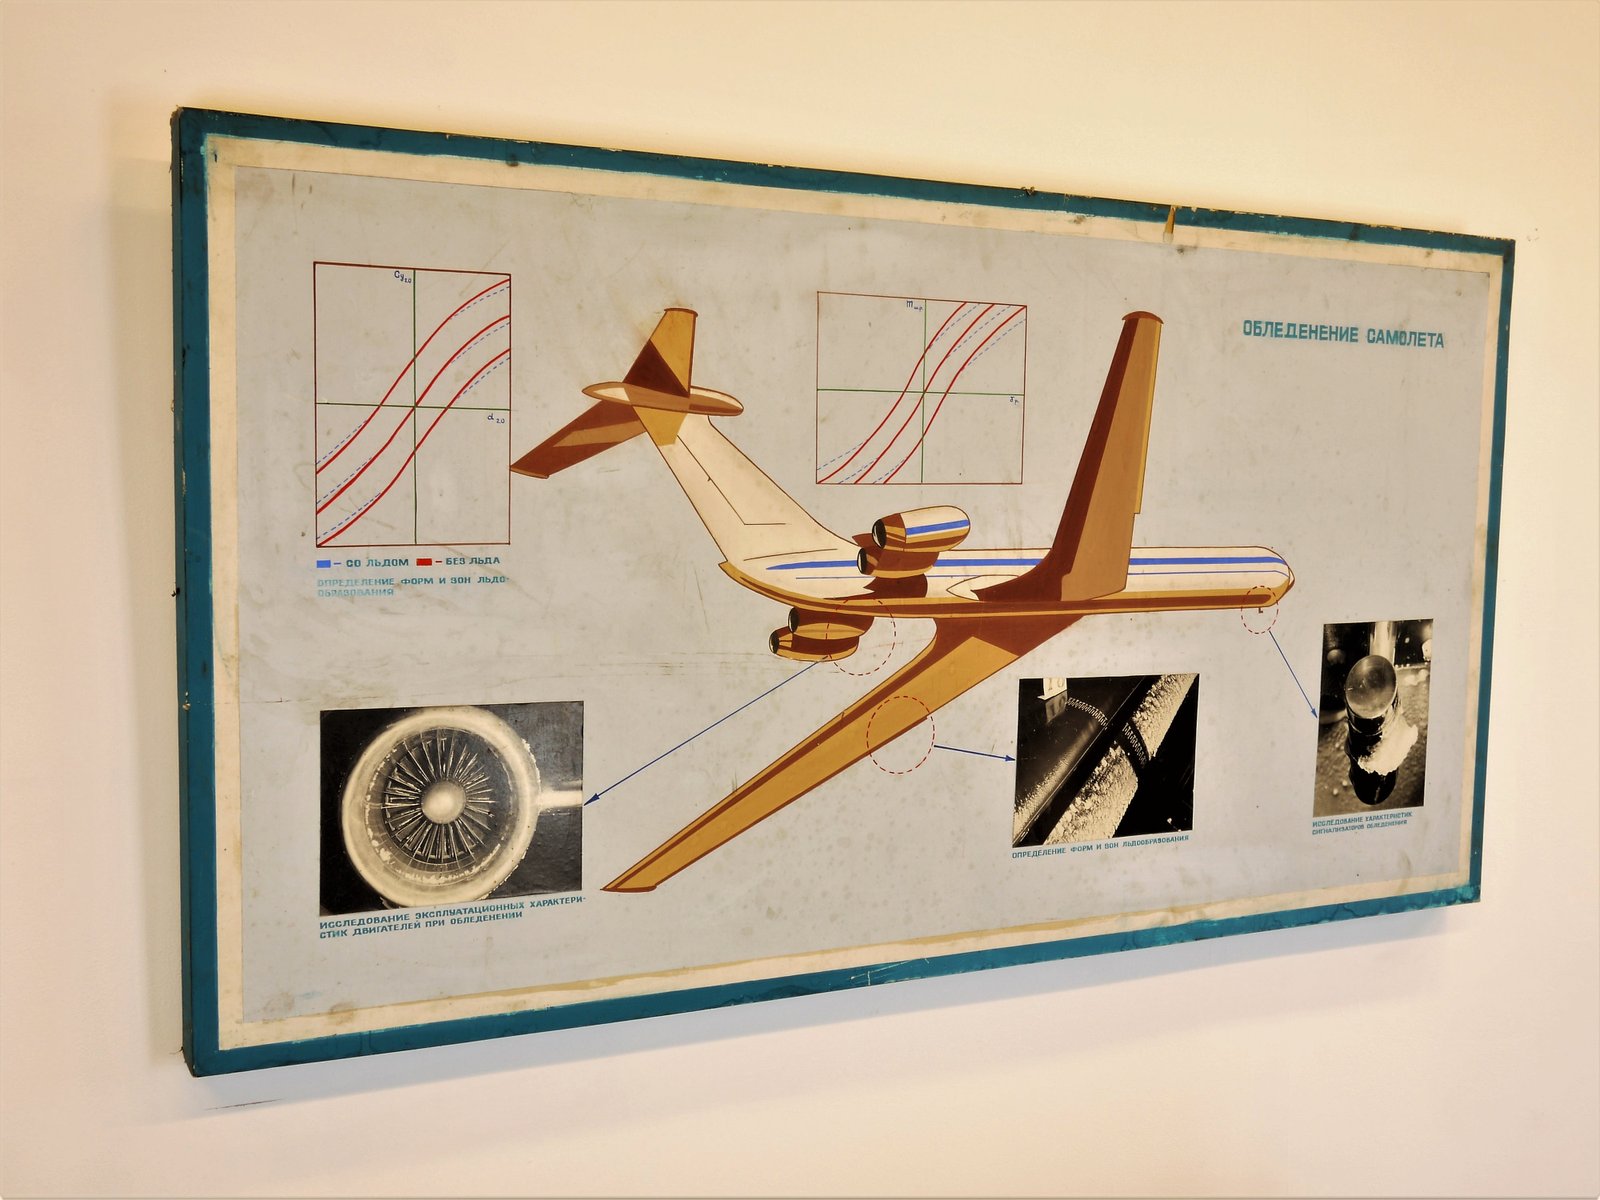 Vintage Aeronautical Charts For Sale